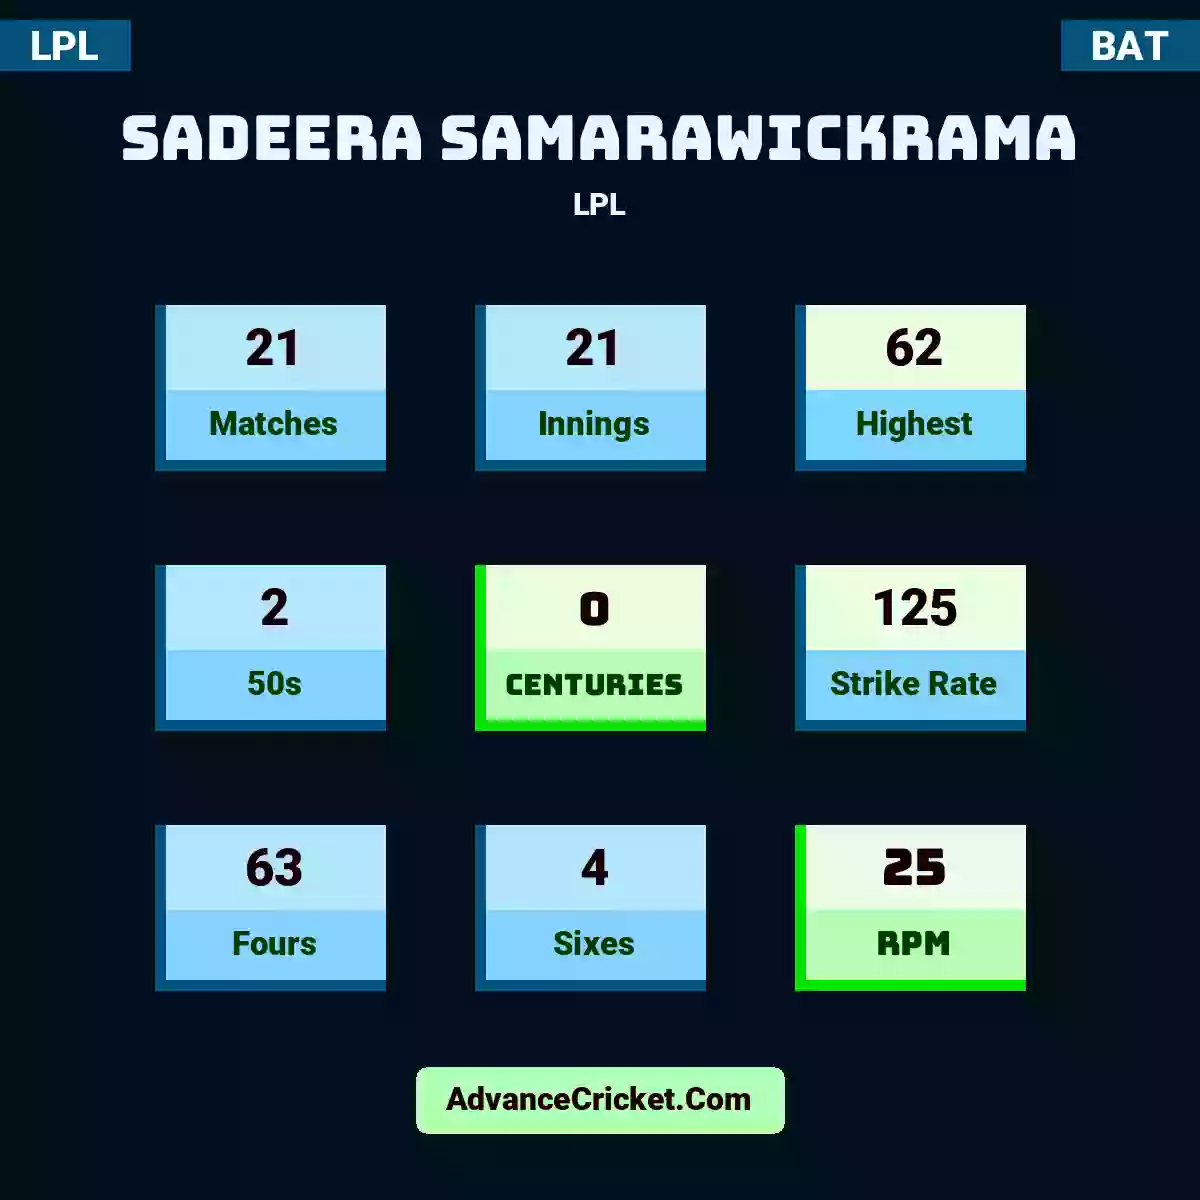 Sadeera Samarawickrama LPL , Sadeera Samarawickrama played 21 matches, scored 62 runs as highest, 2 half-centuries, and 0 centuries, with a strike rate of 125. S.Samarawickrama hit 63 fours and 4 sixes, with an RPM of 25.